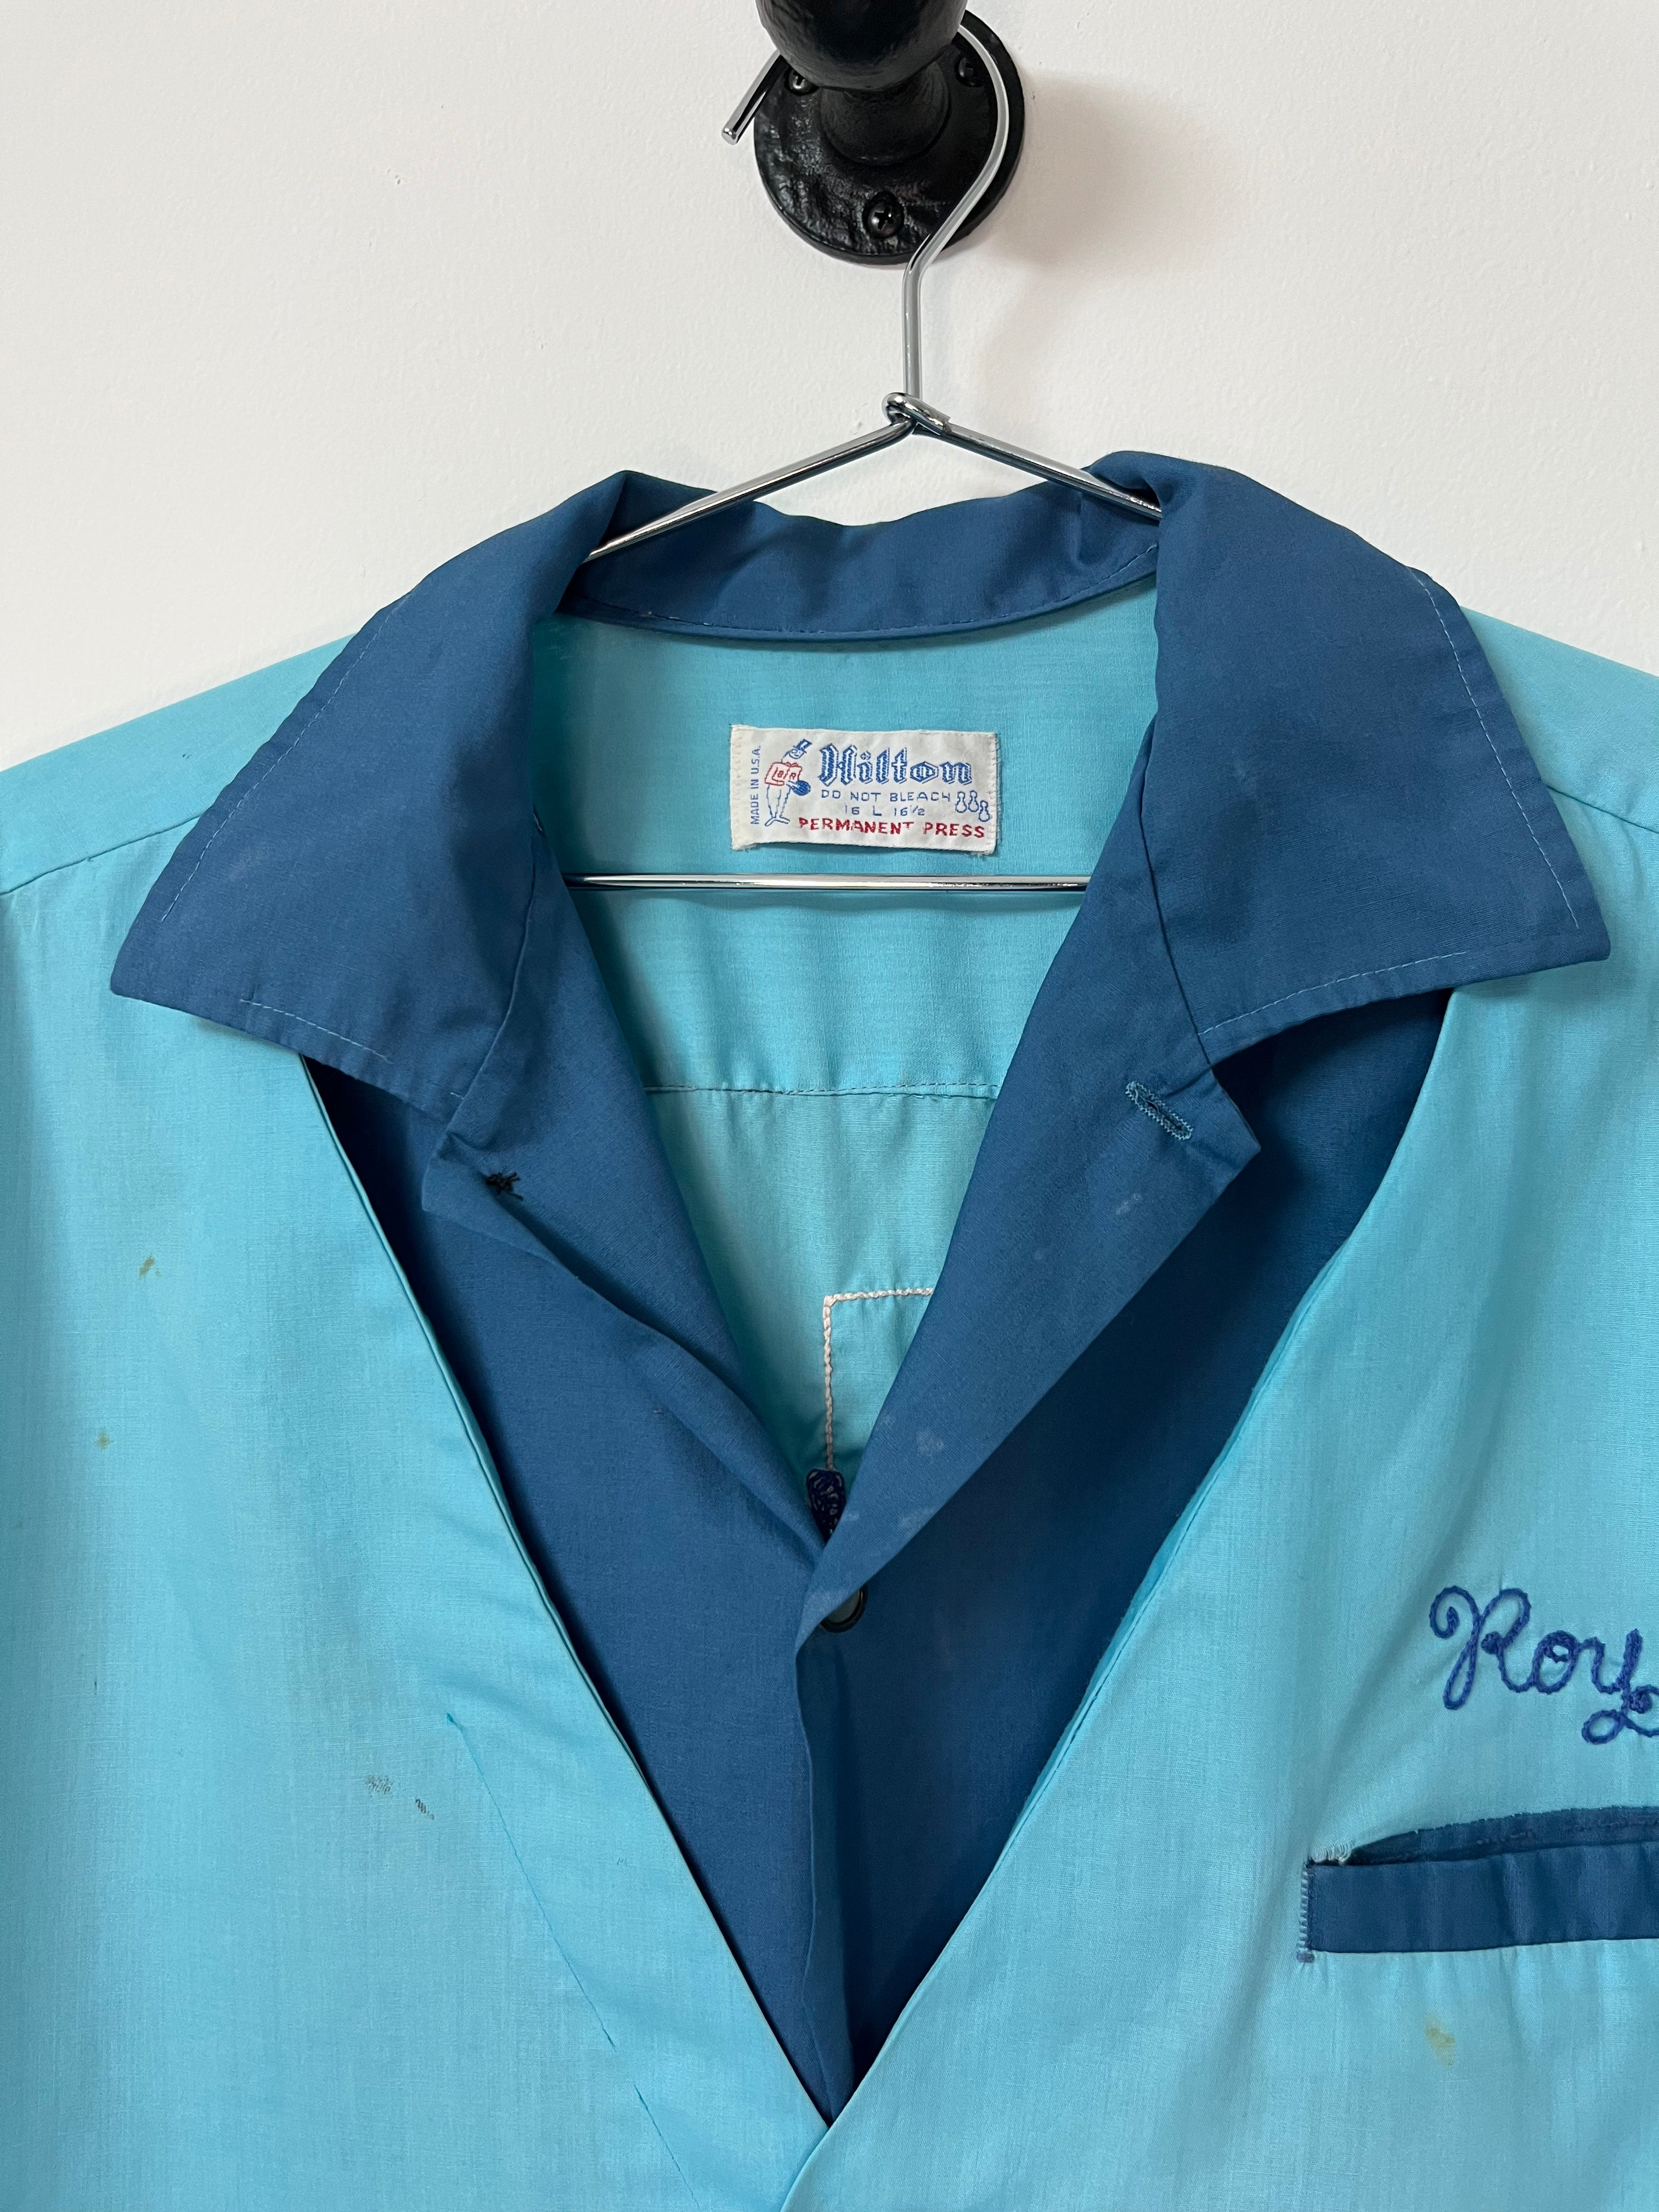 1960s Oakland Trojans Bowling Club Bowling Shirt With Double Layer Collar - Aqua/Blue - M/L